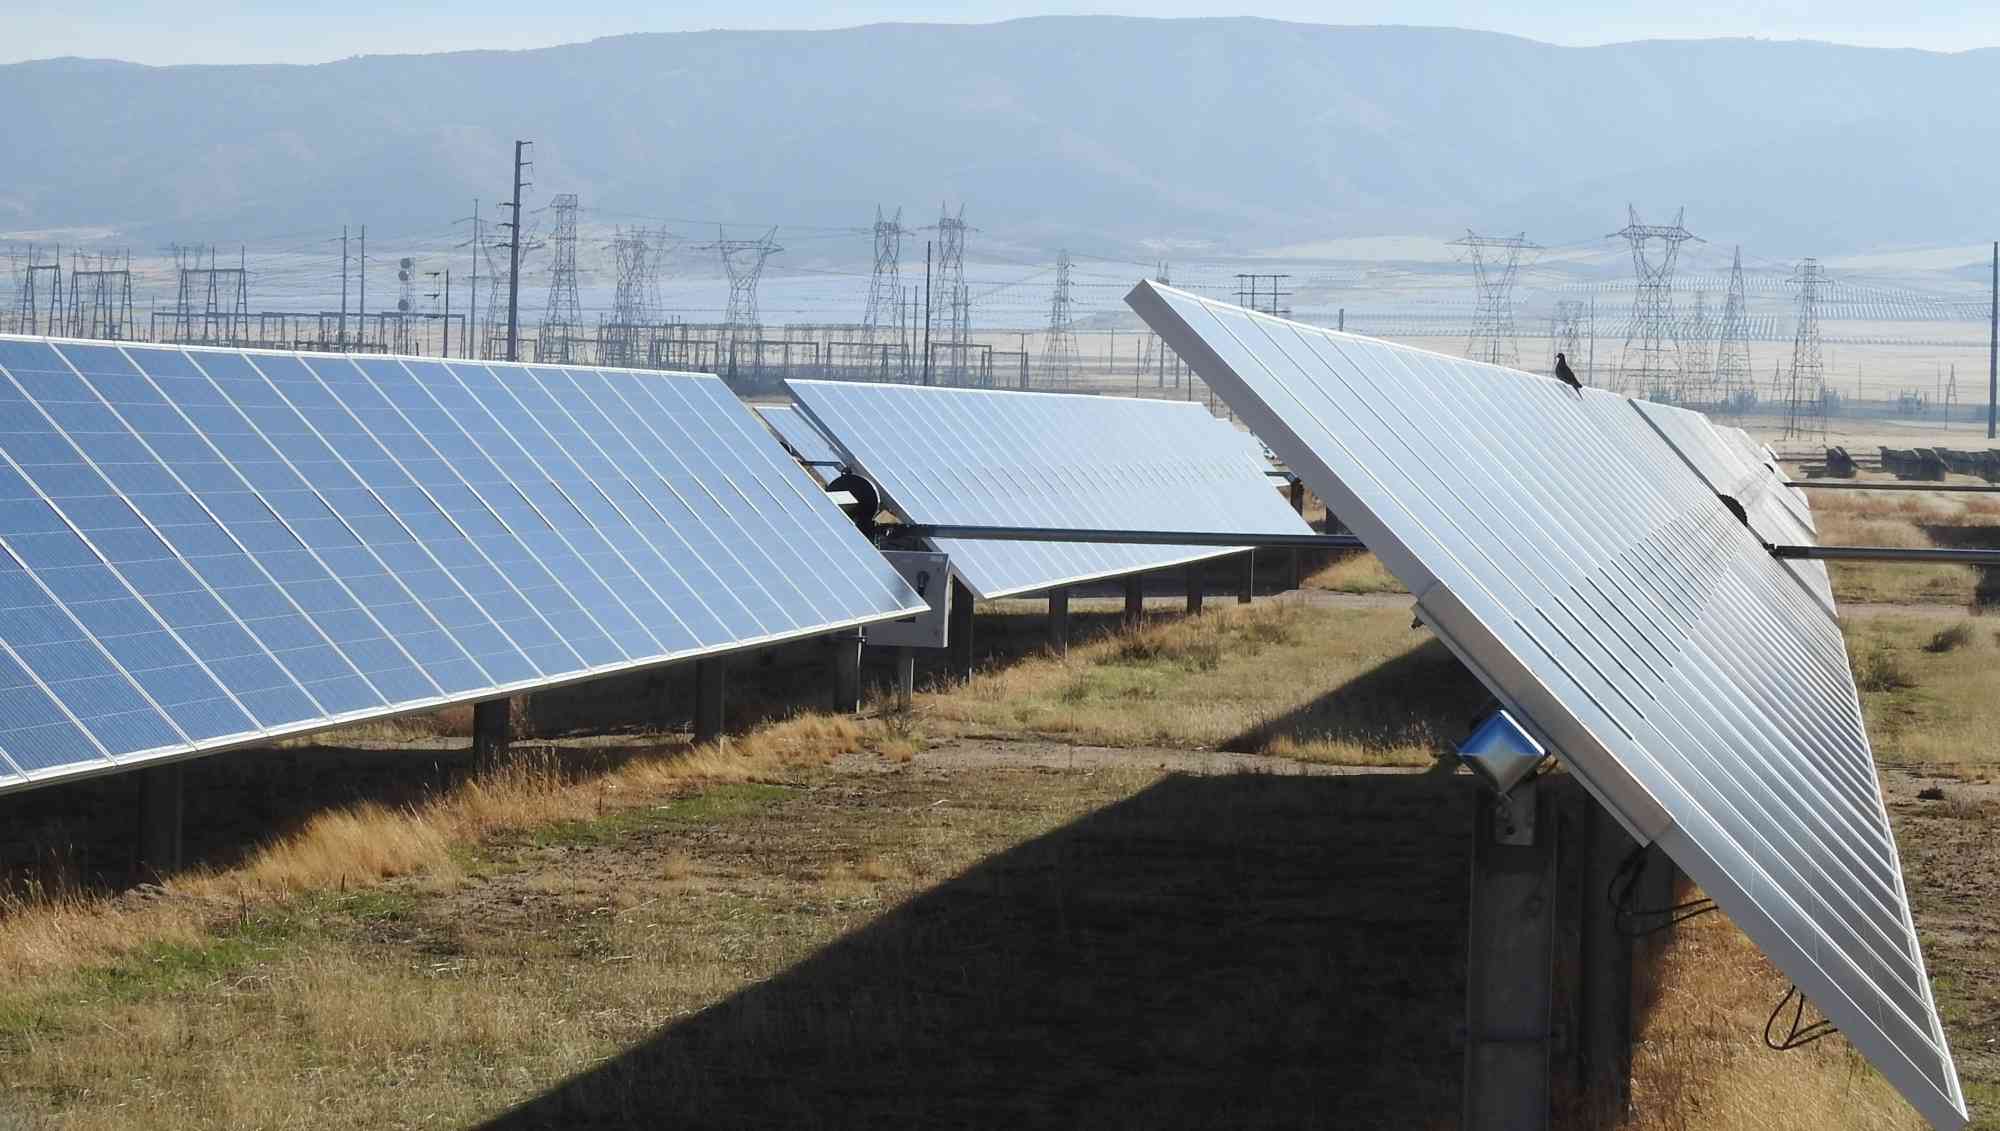 Solar panels in Antelope Valley, California 